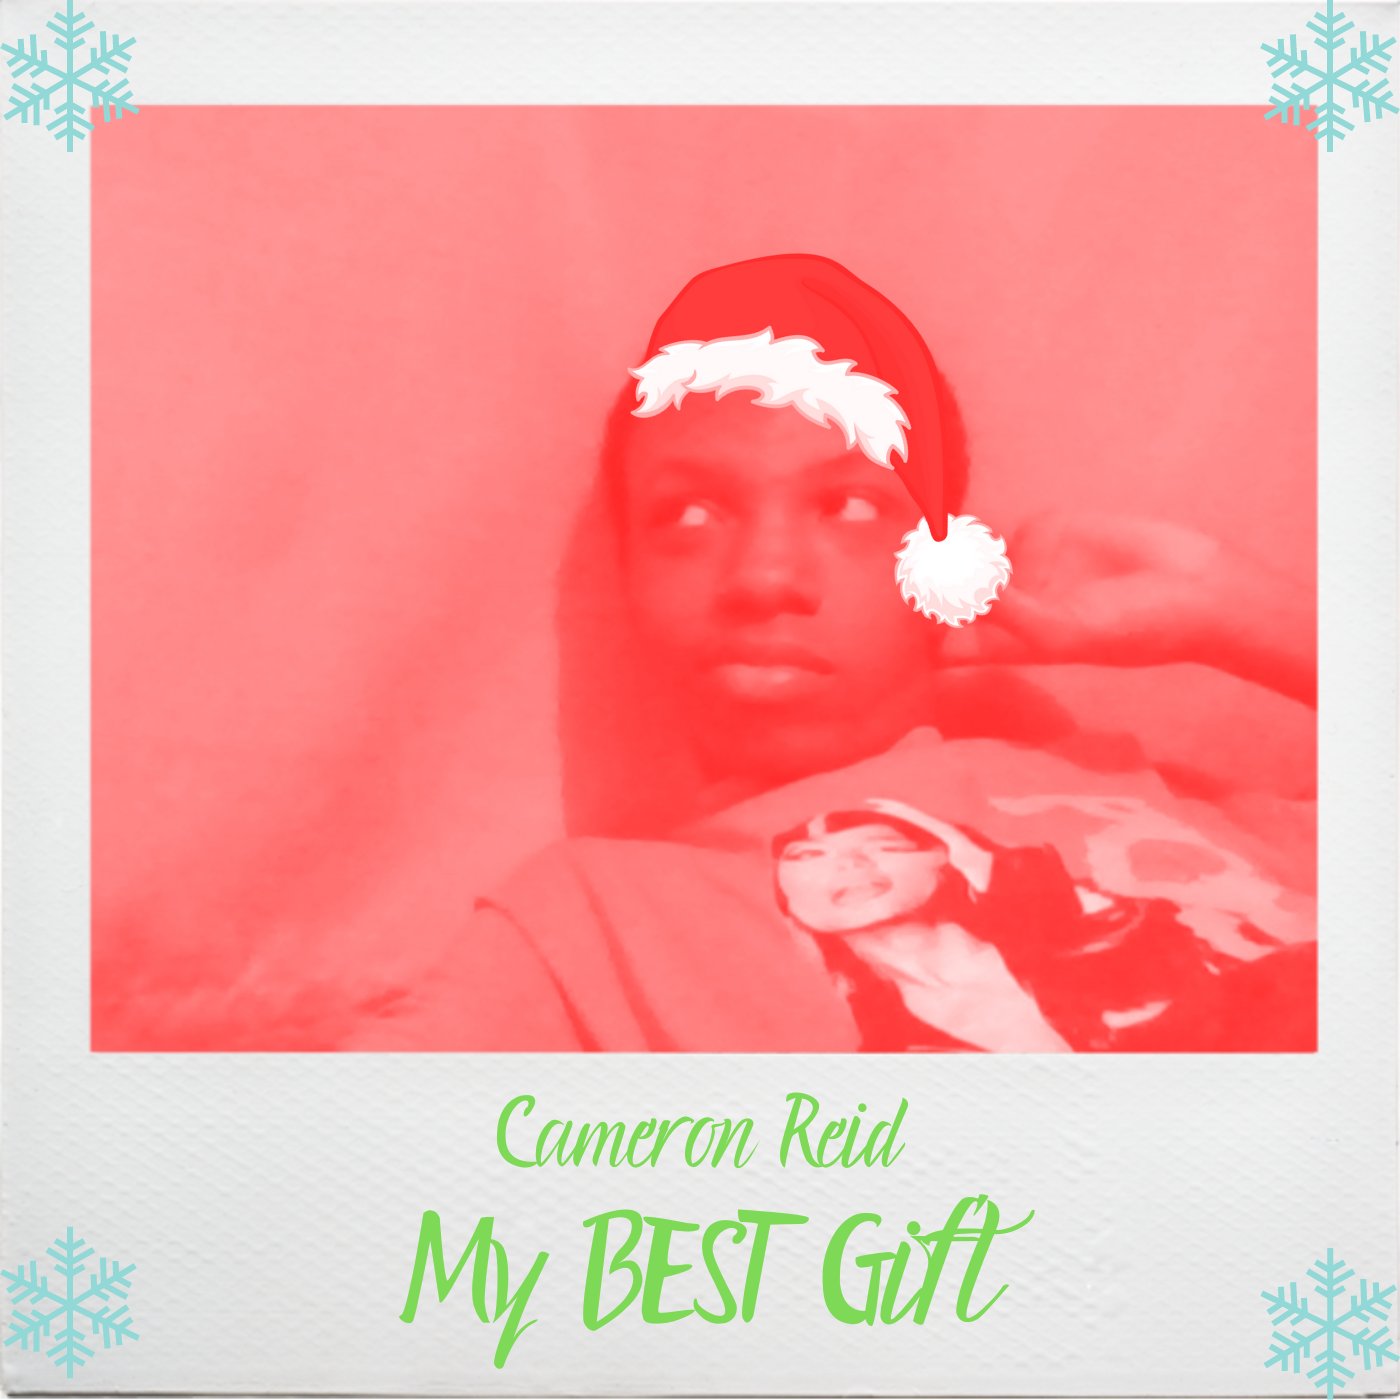 Cameron Reid — My Best Gift cover artwork